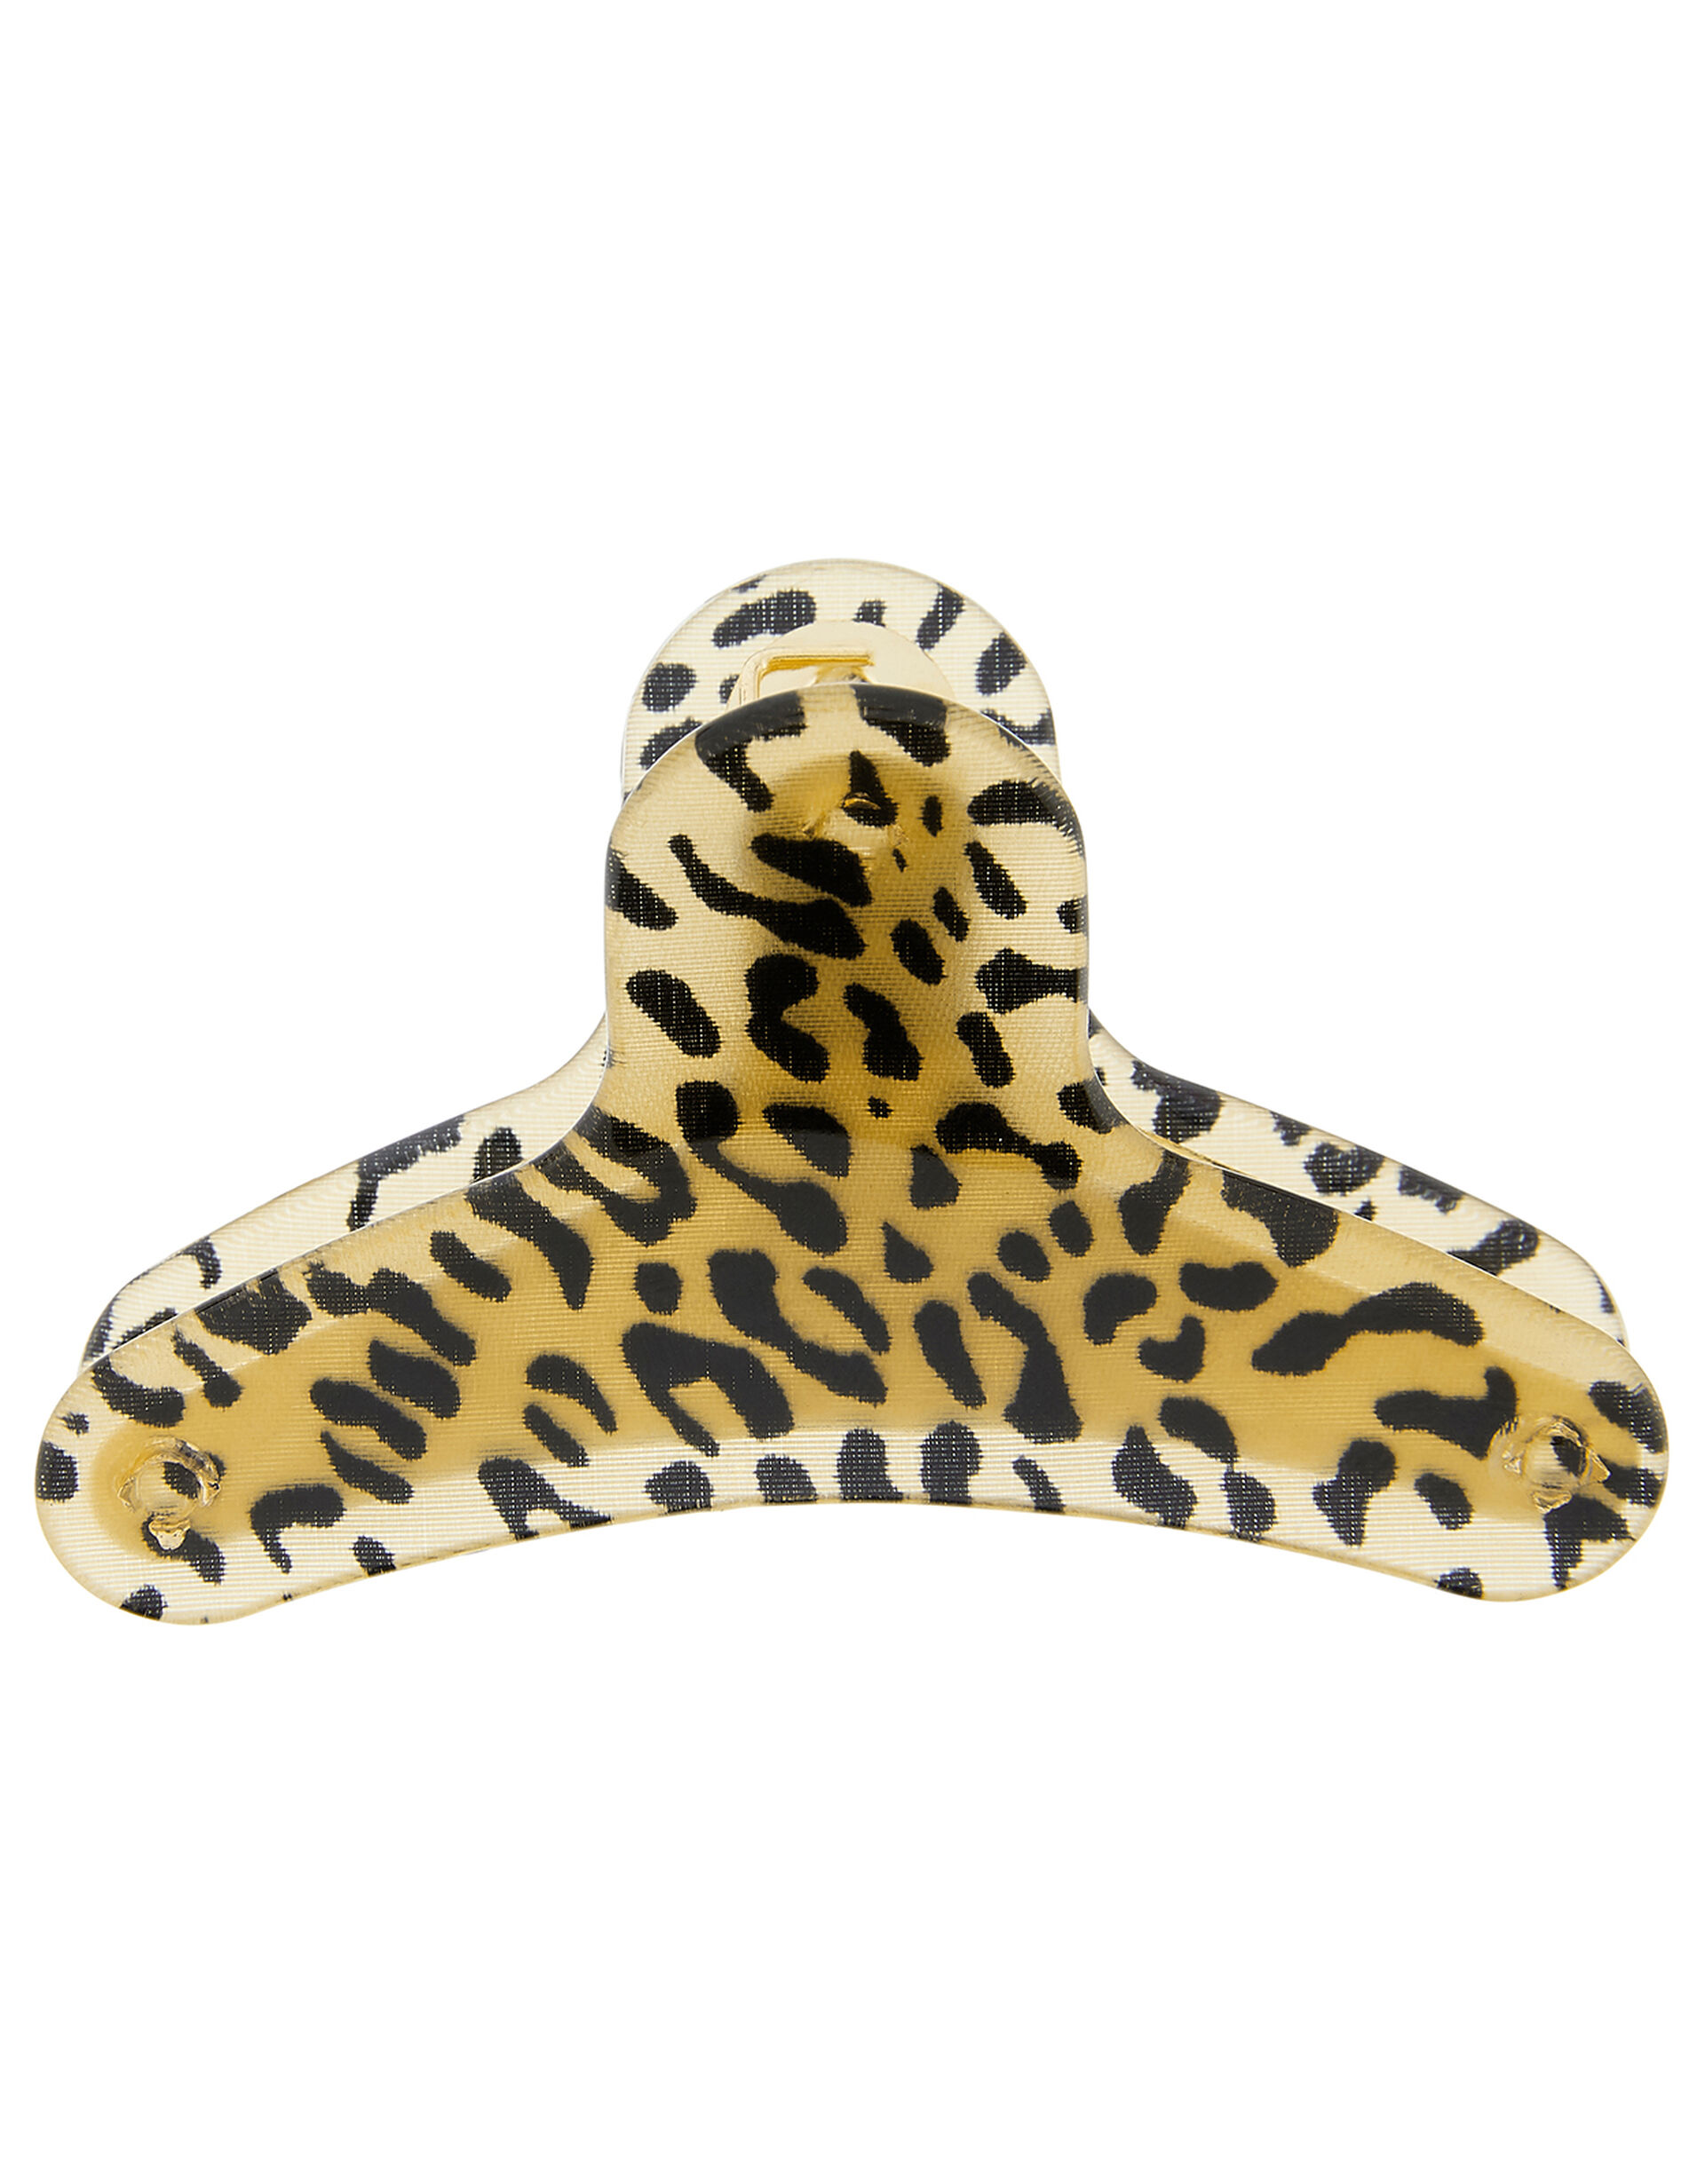 Leopard Print Bulldog Hair Clip, , large